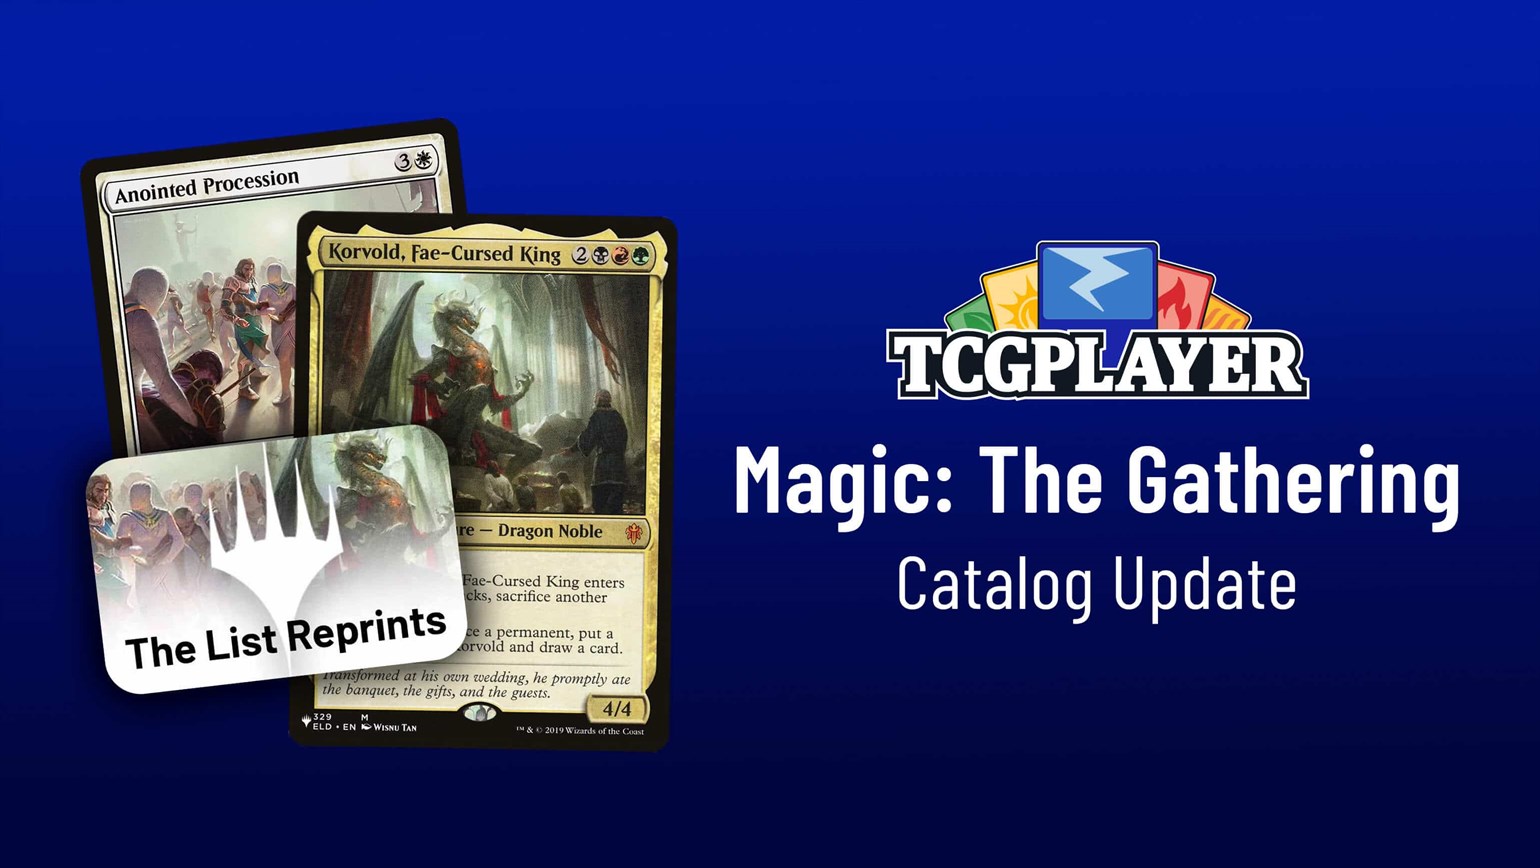 Magic: The Gathering Catalog Update